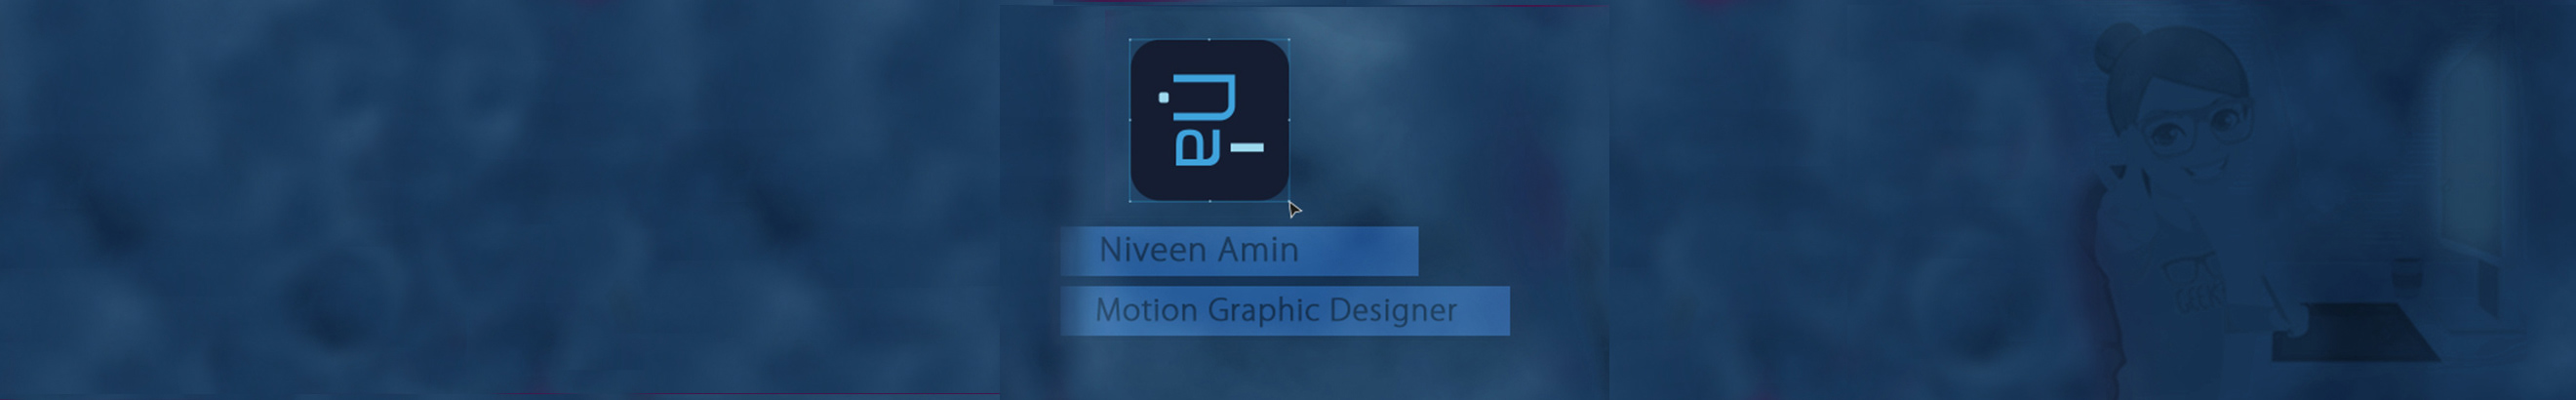 Niveen Amin's profile banner